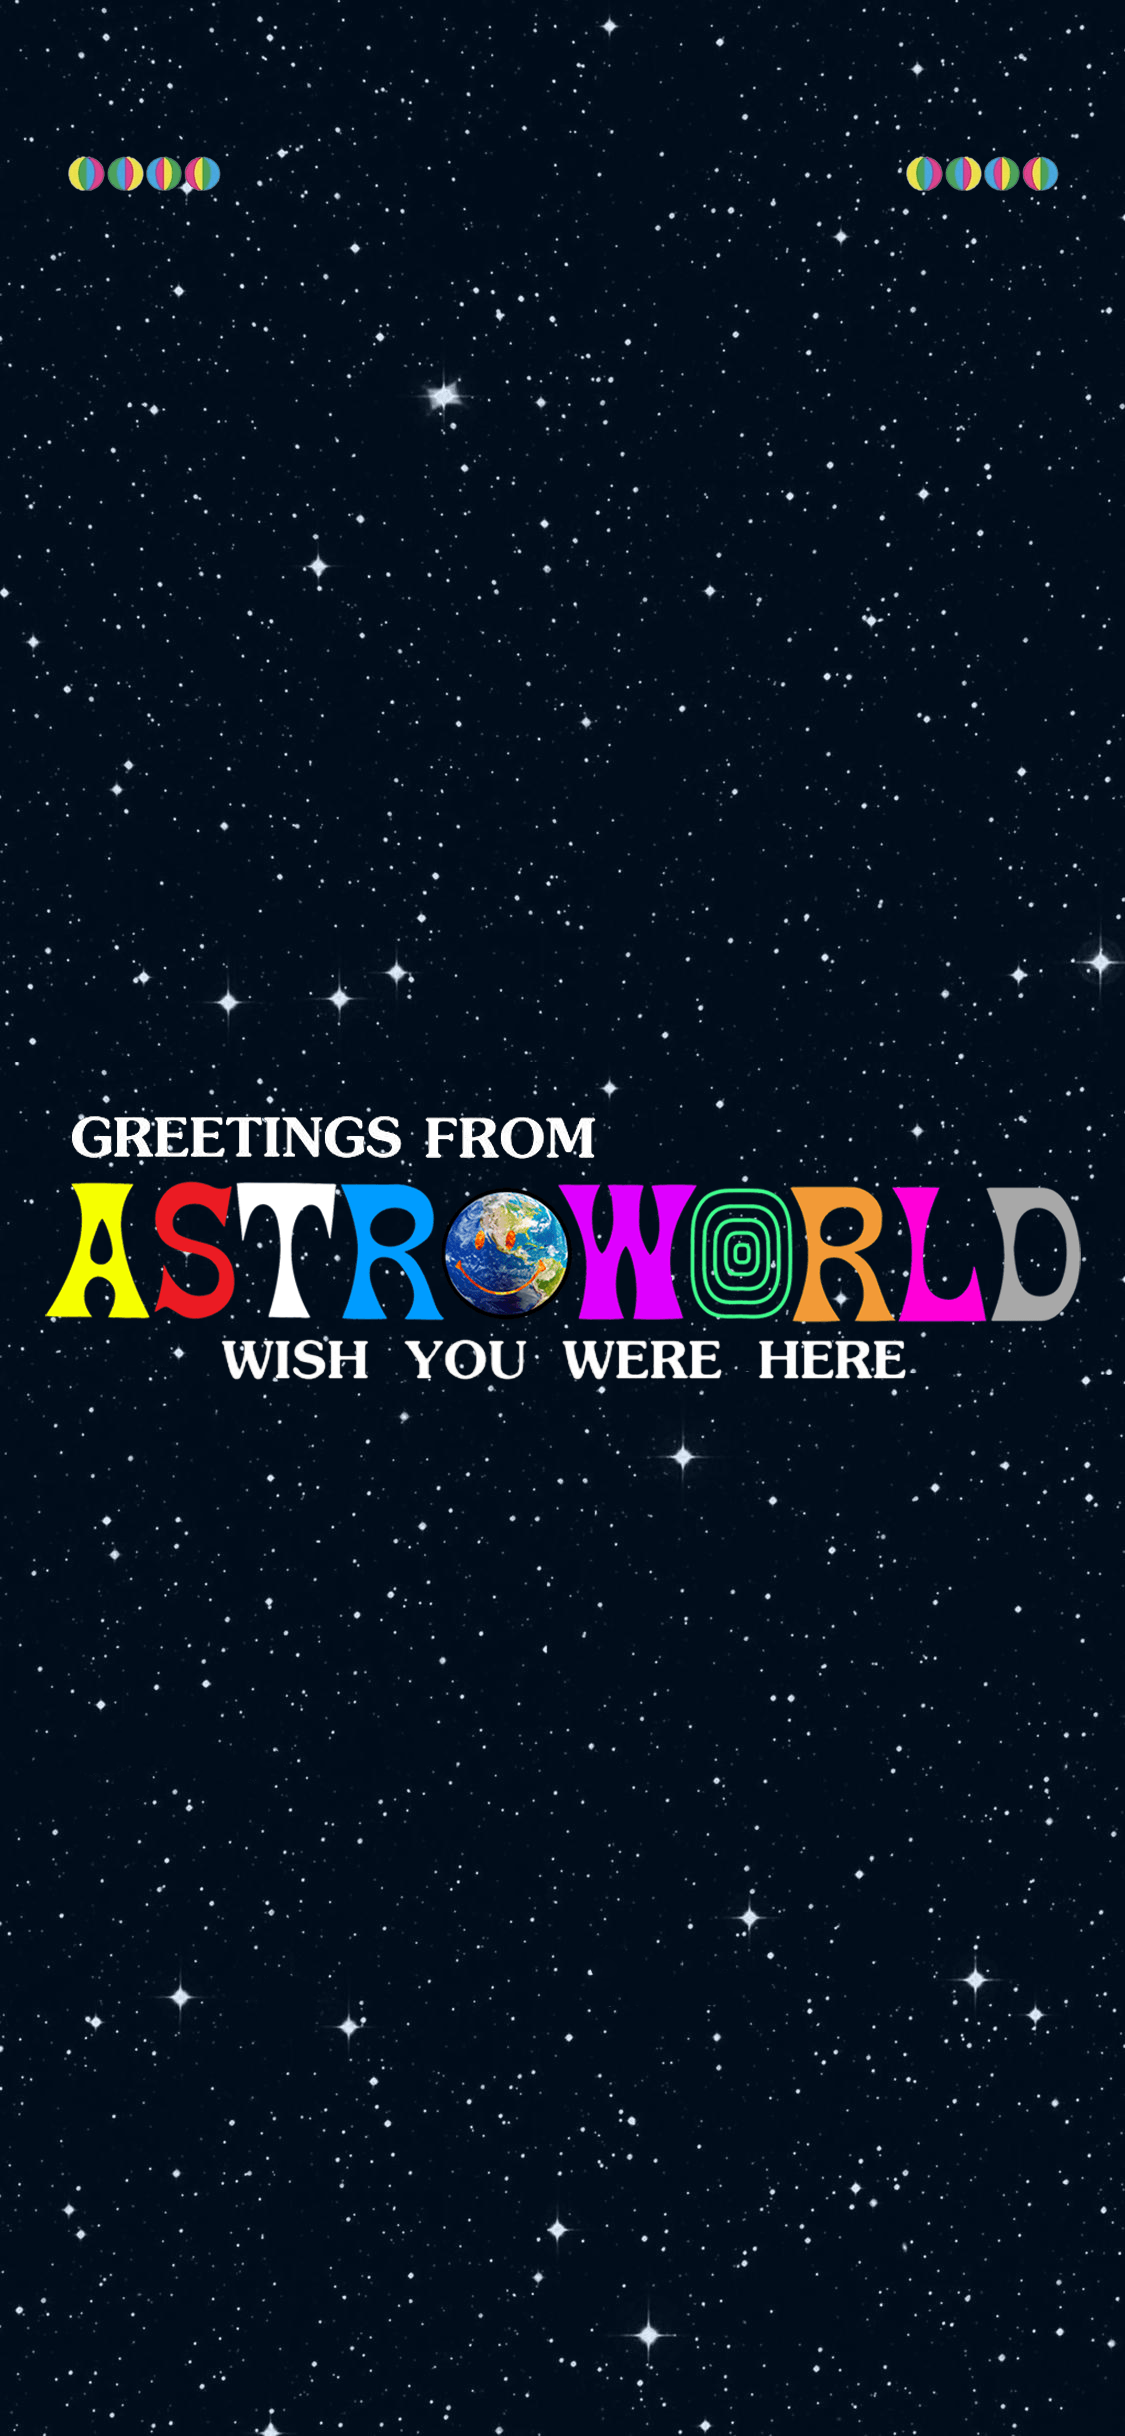 Image] Astroworld iPhone X Wallpaper (Lock Screen) [1125